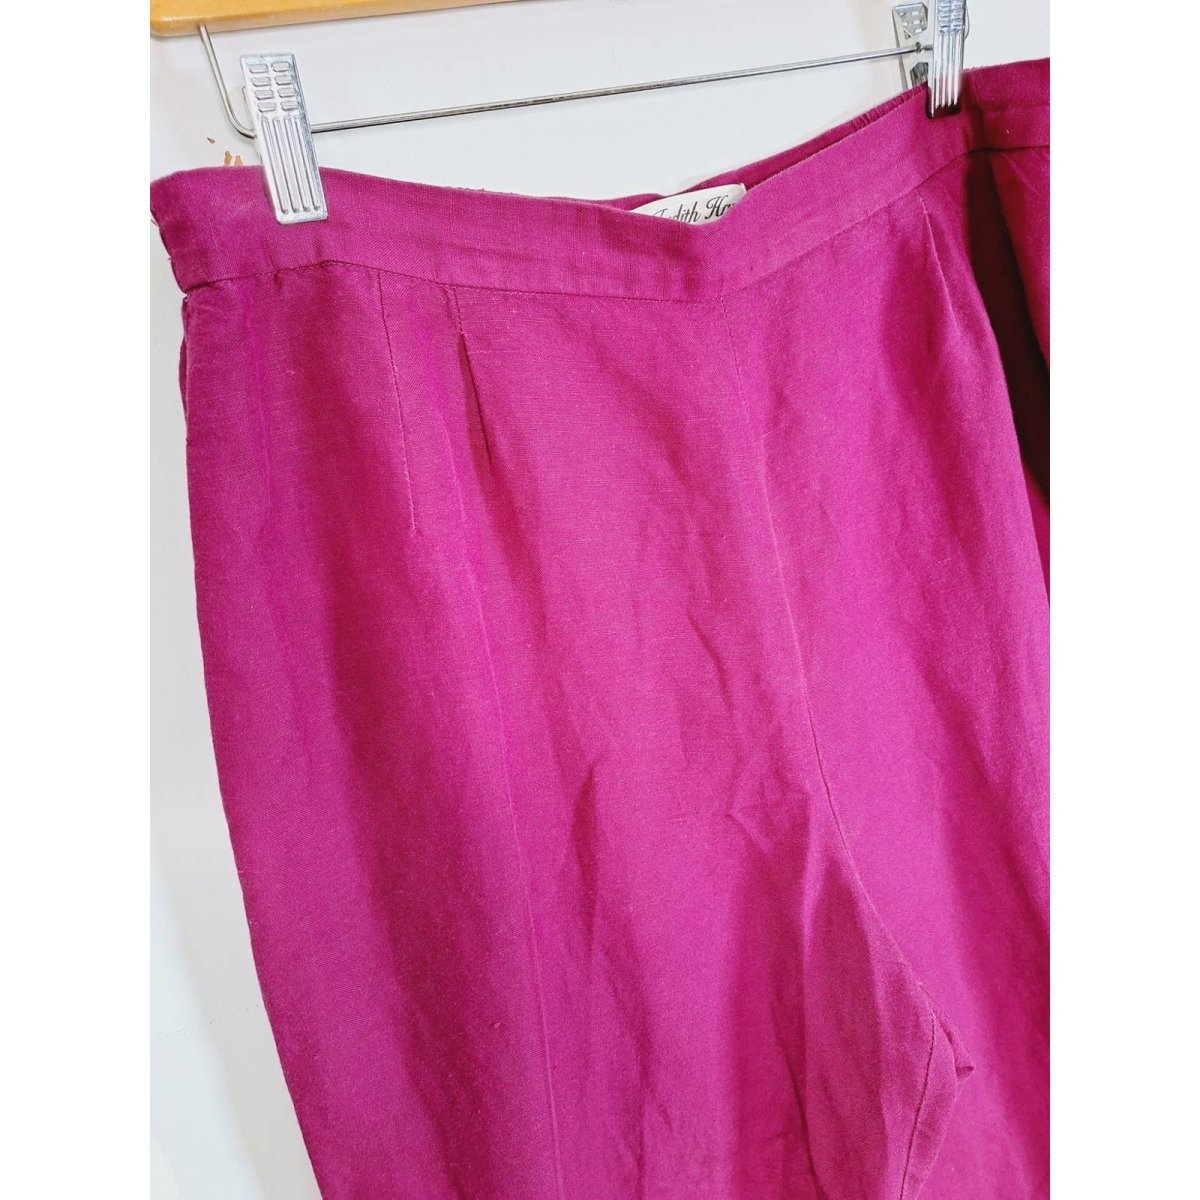 Vintage 80s/90s High Waist Fuschia Linen Blend Pants Women's Size 14 Waist 32" to 36" - themallvintage The Mall Vintage